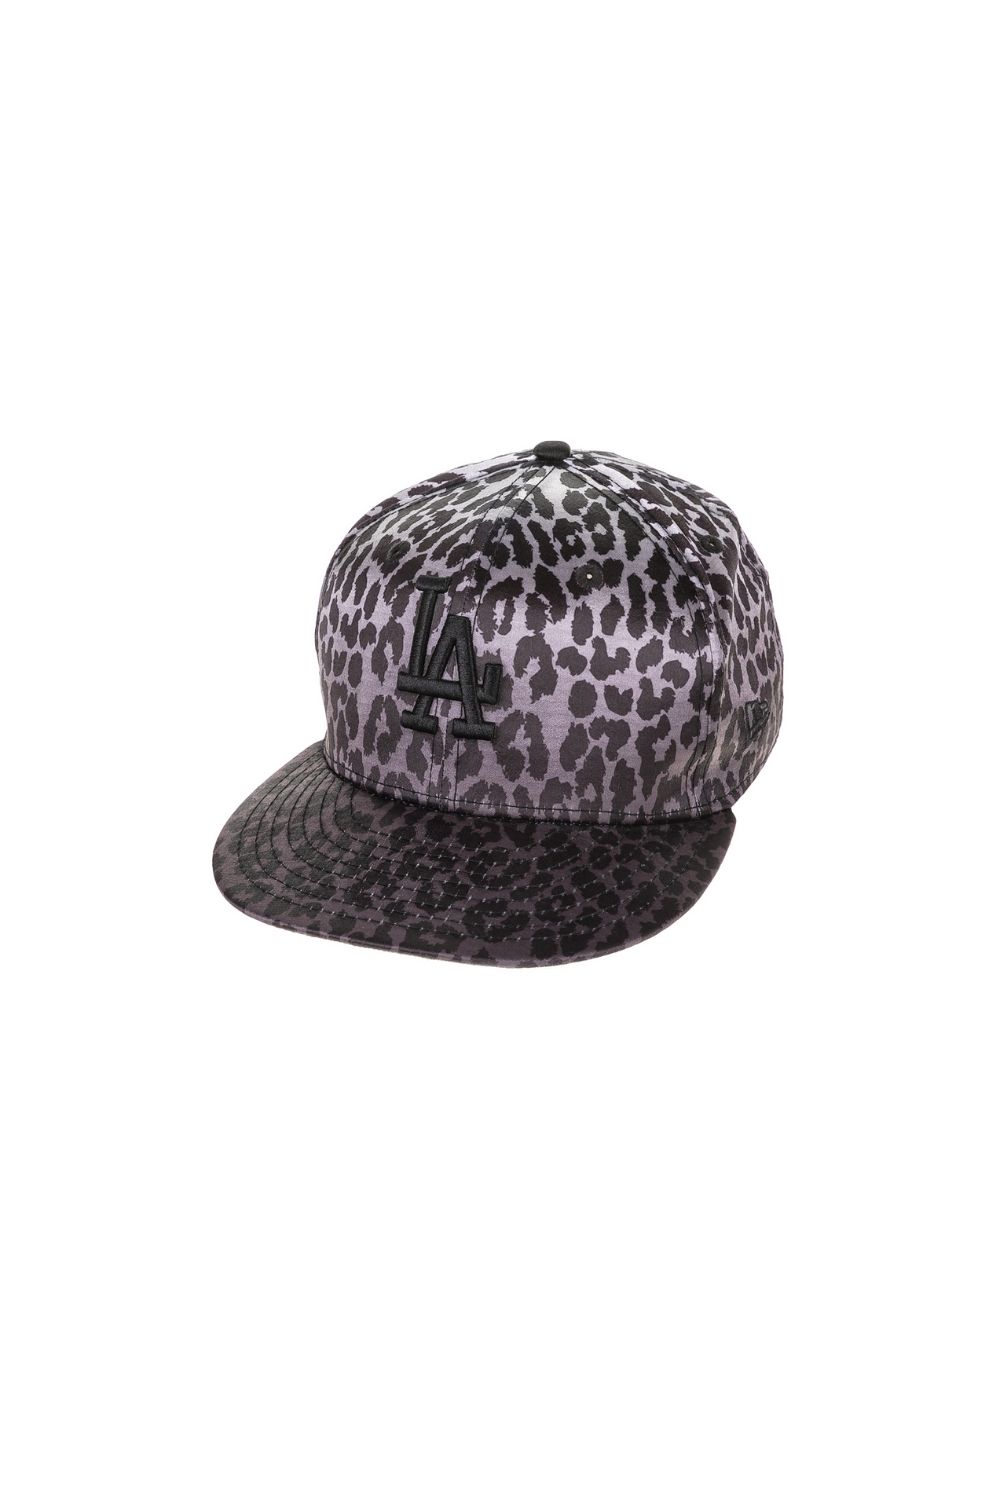 NEW ERA – Γυναικείο καπέλο LEO FADE 9FIFTY LOSD NEW ERA γκρι-μαύρο 1456978.0-G4G0